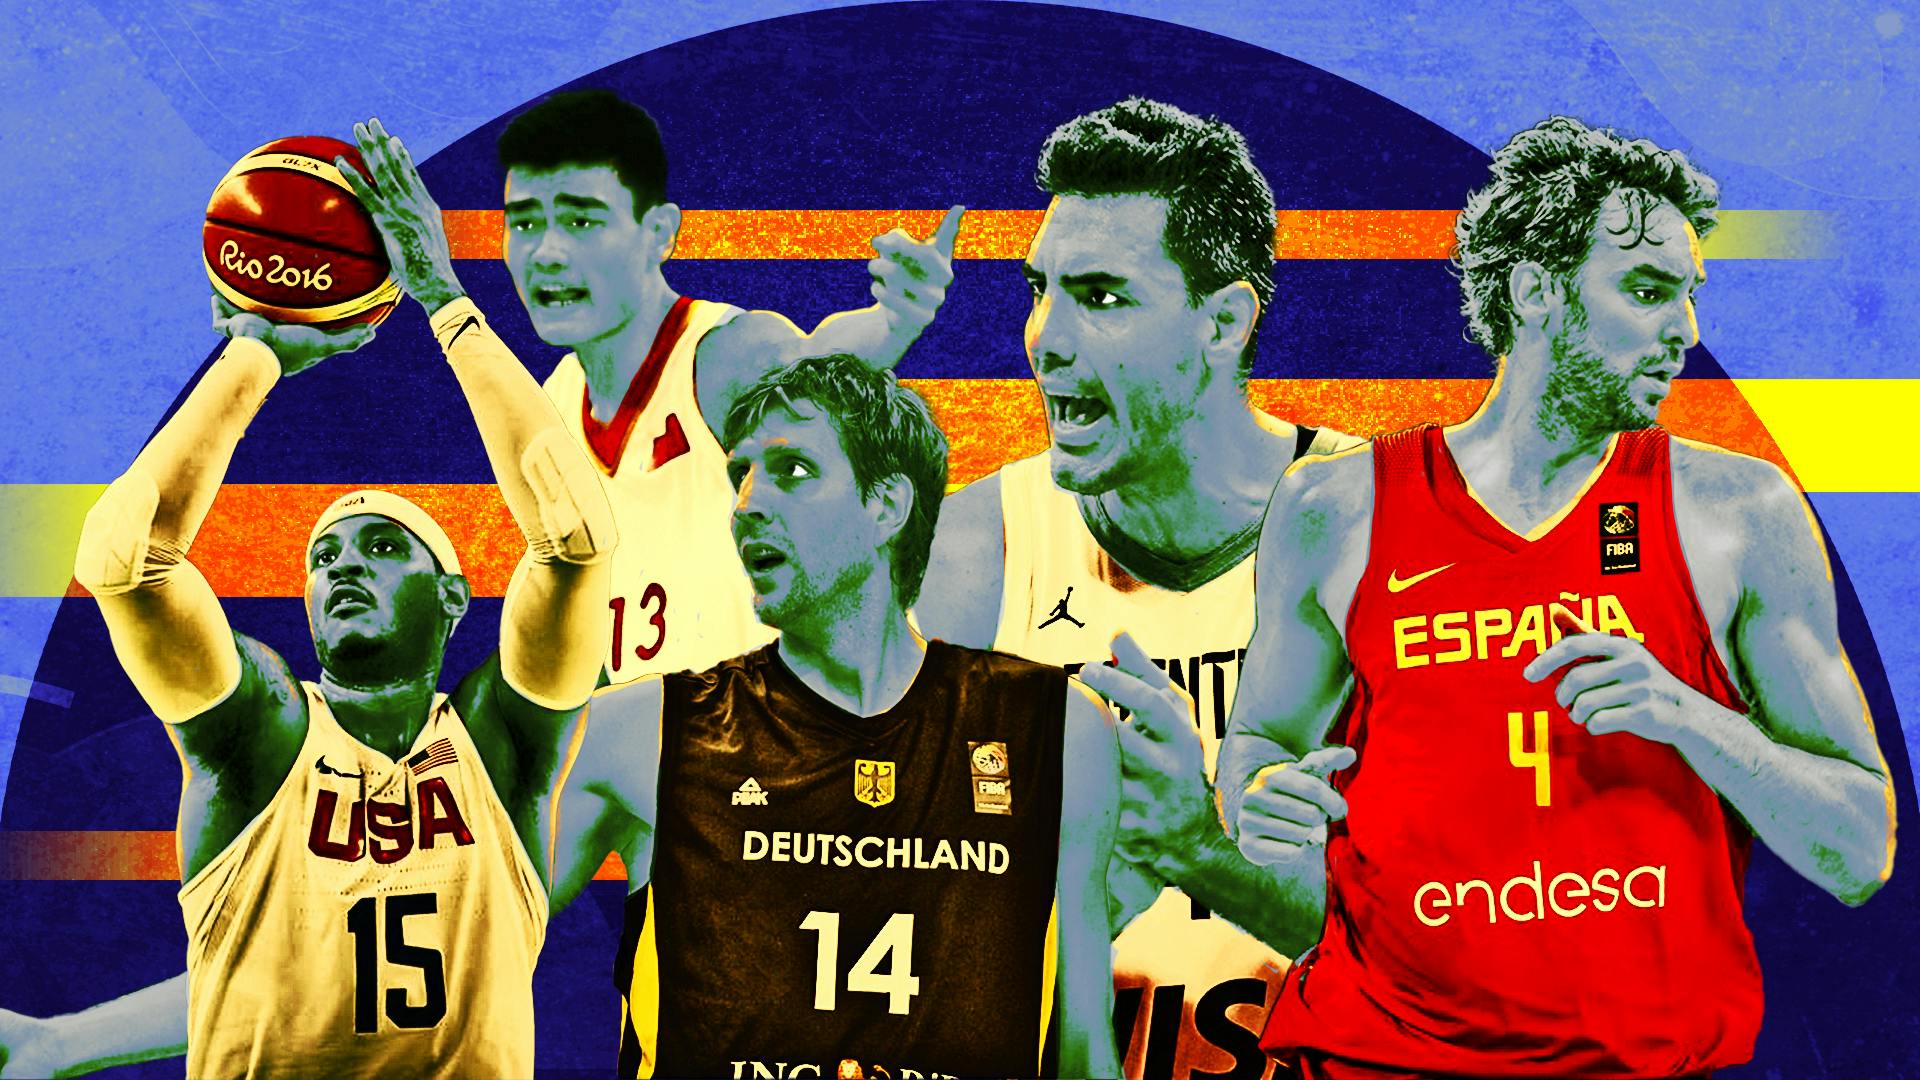 Melo, Dirk, Pau, Luis, Yao: Who had the best FIBA career?
